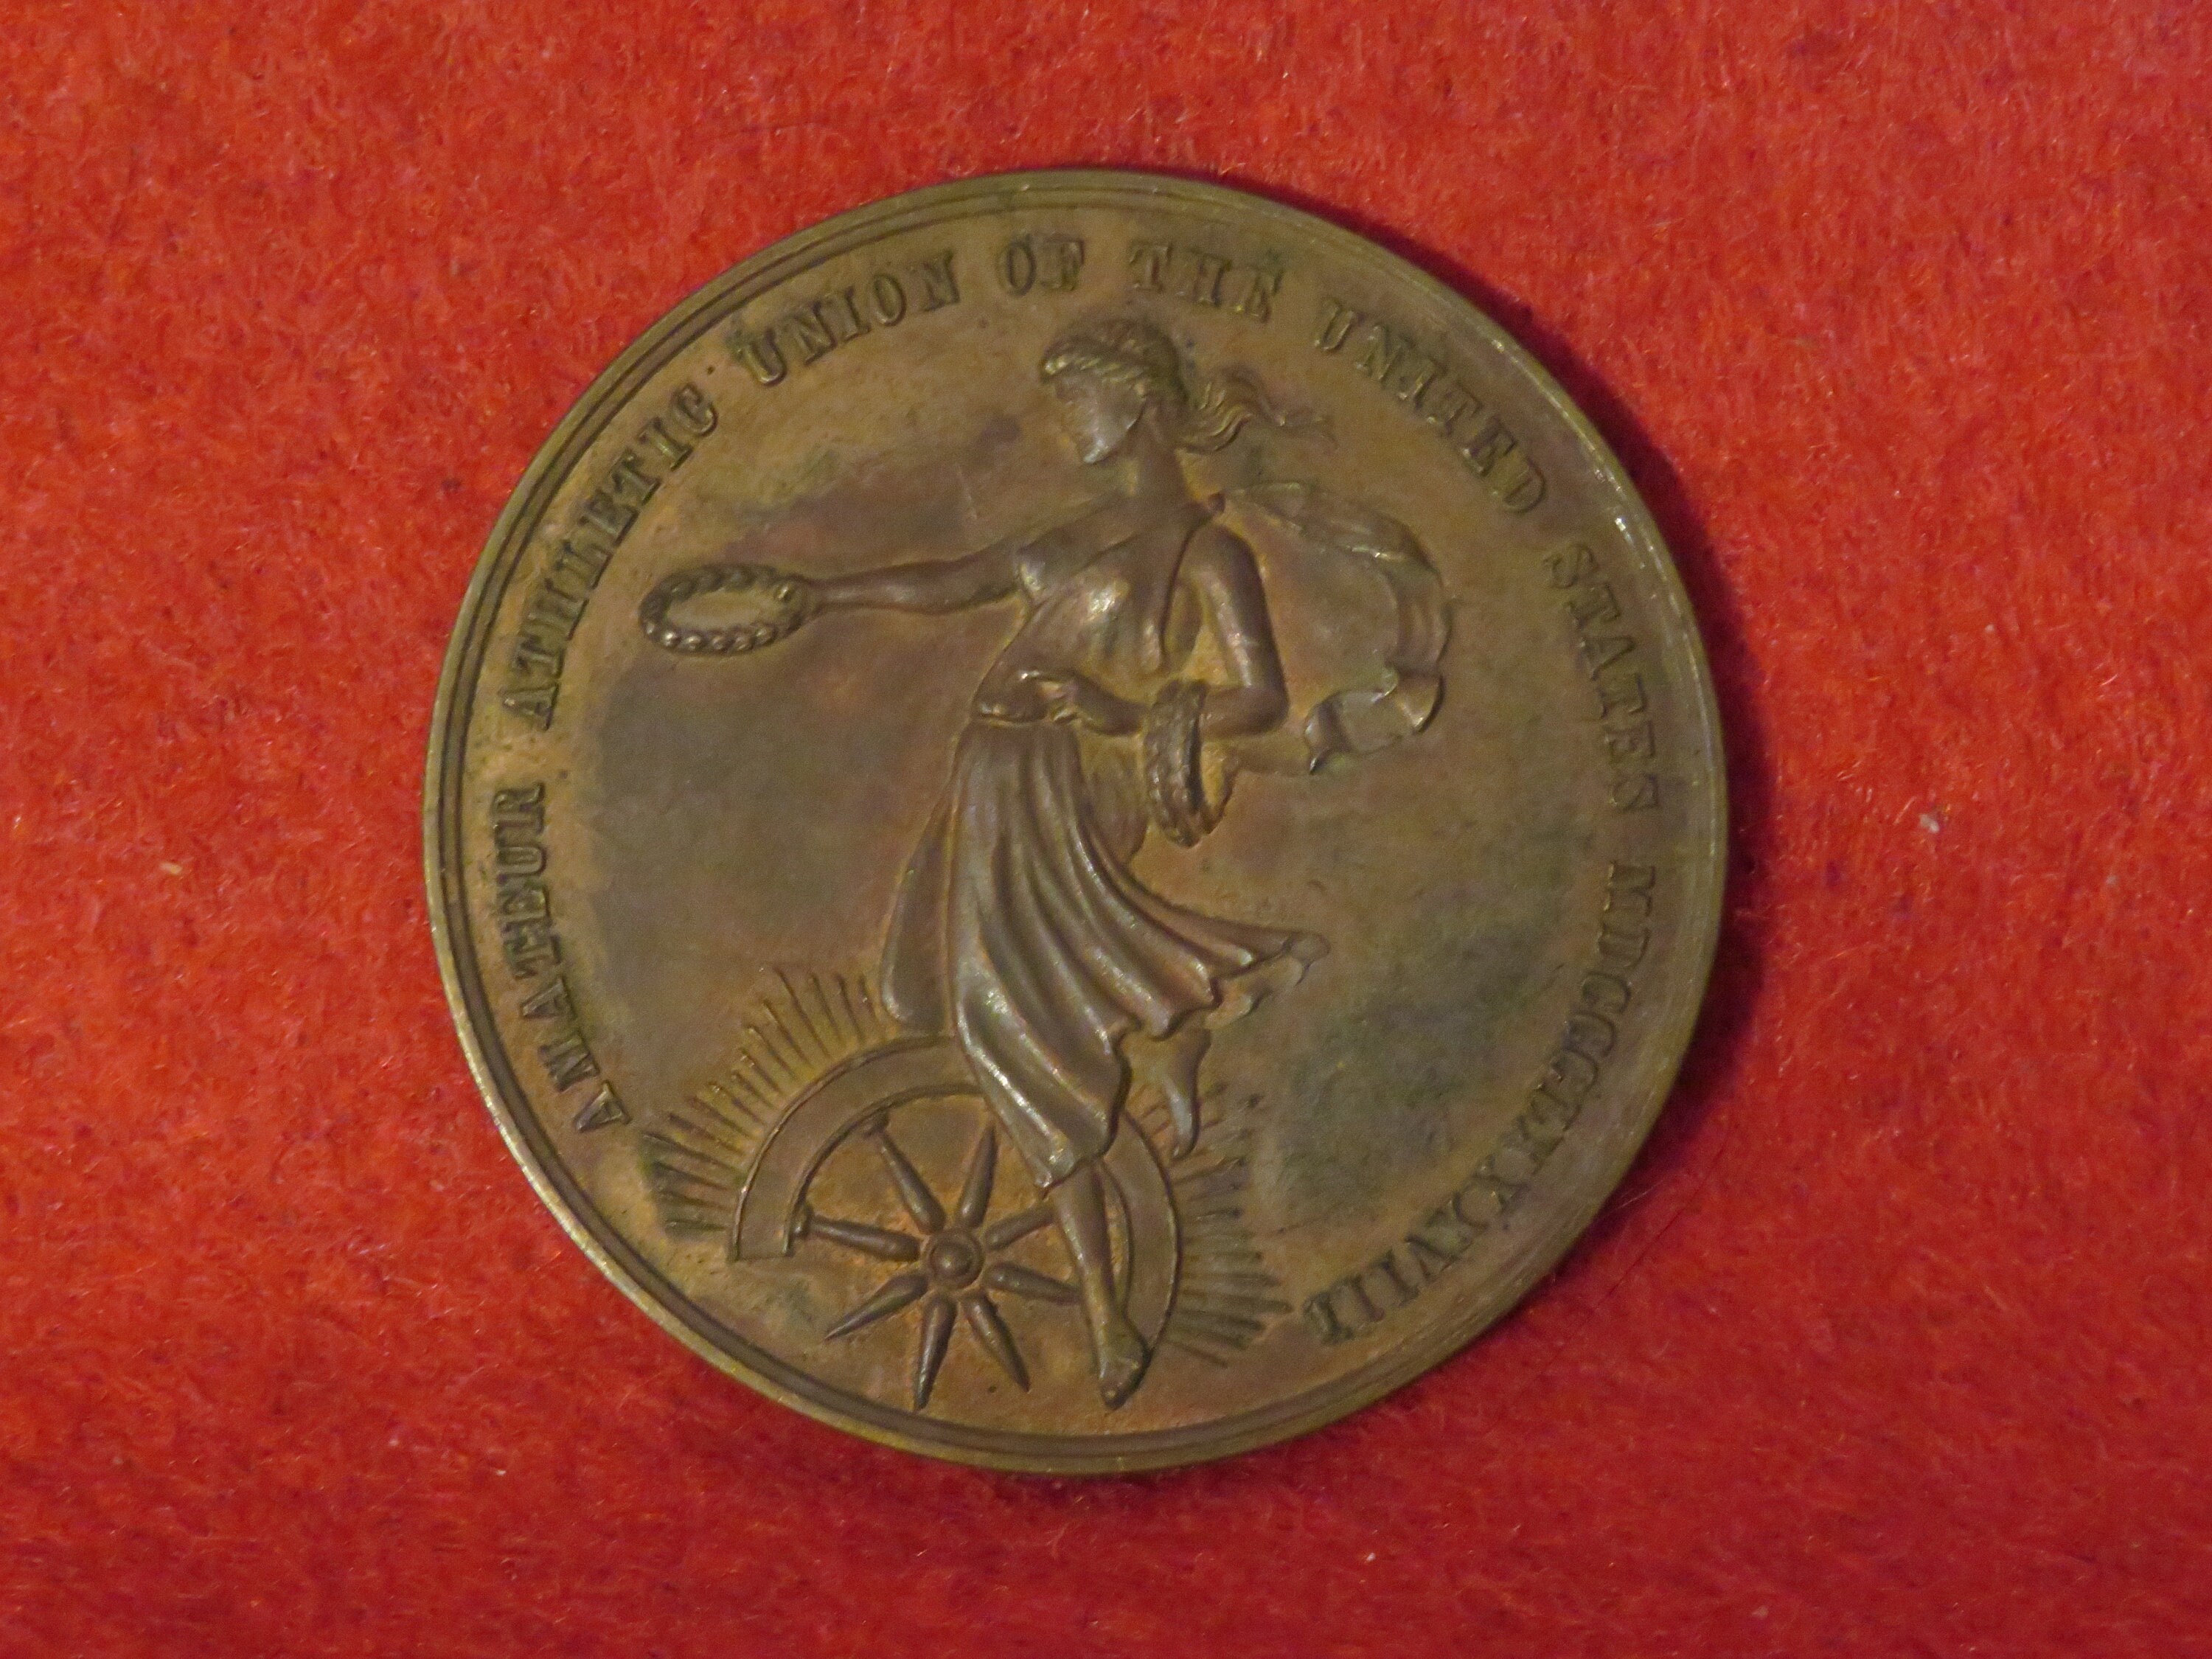 Aau Medal image